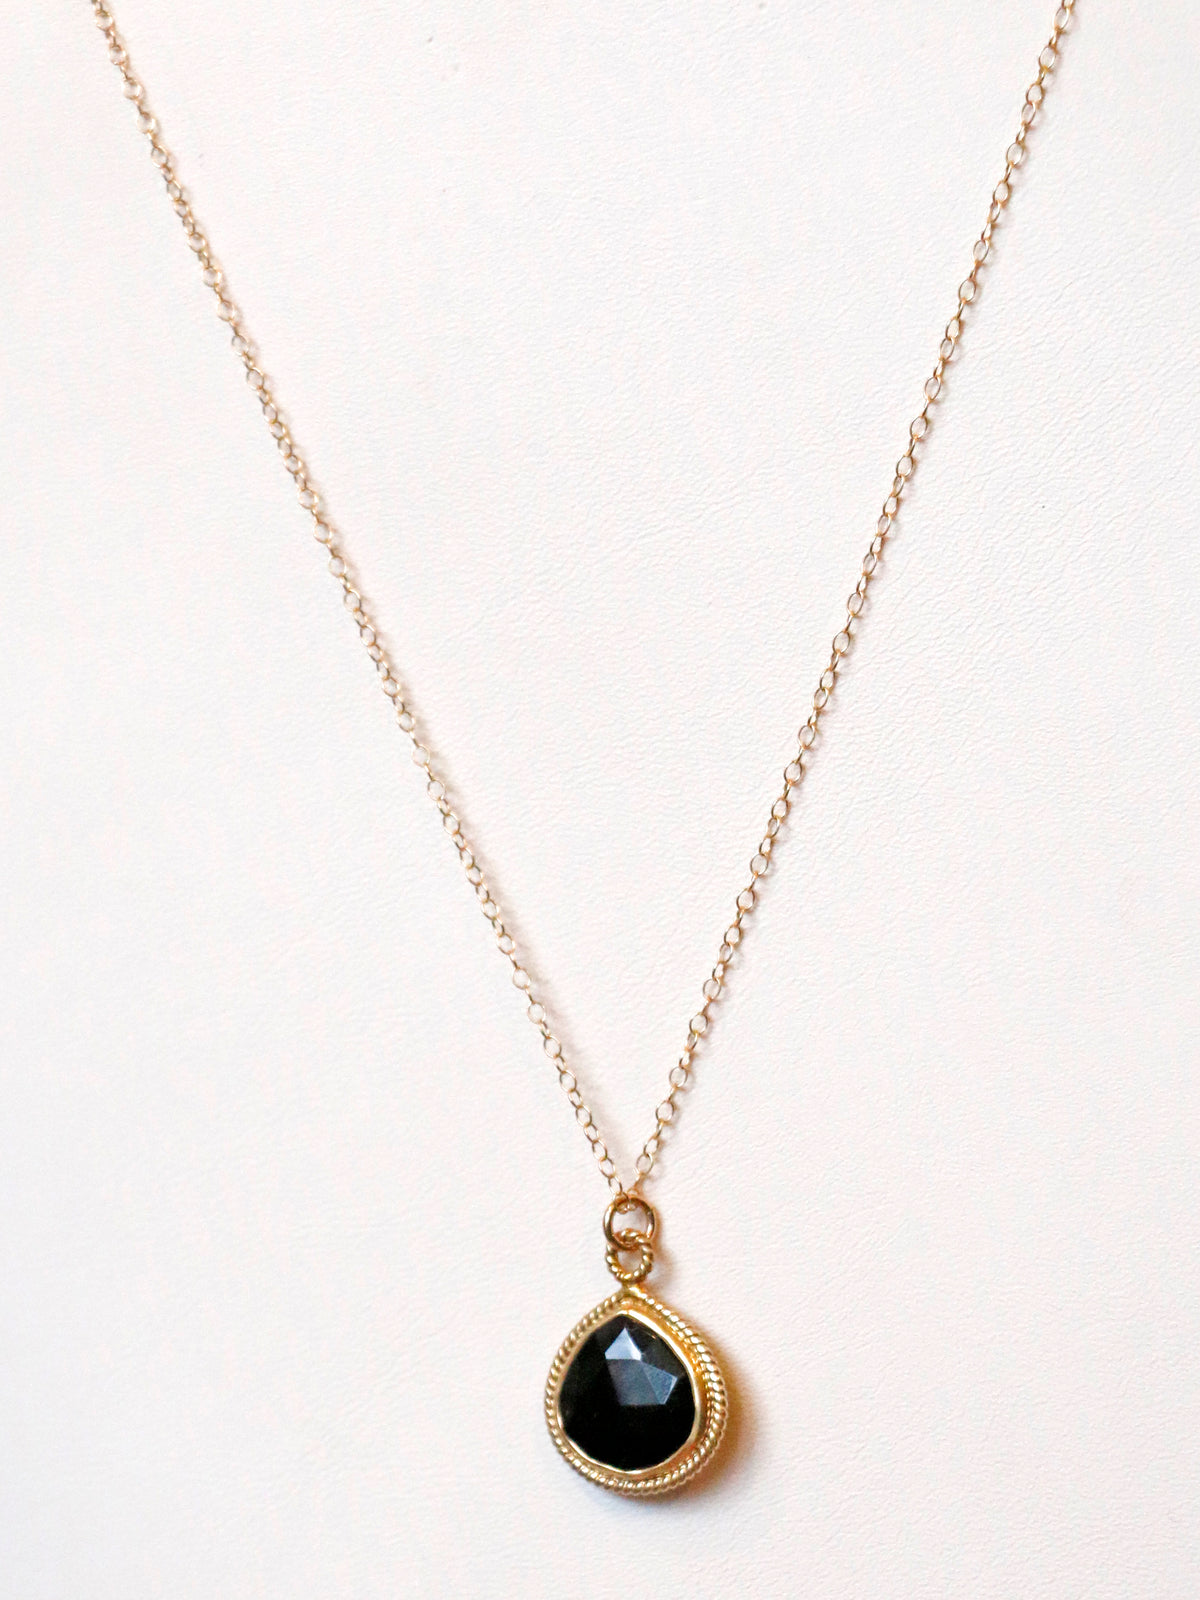 Susan Rifkin Teadrop Spinel Charm Necklace | Gold Filled